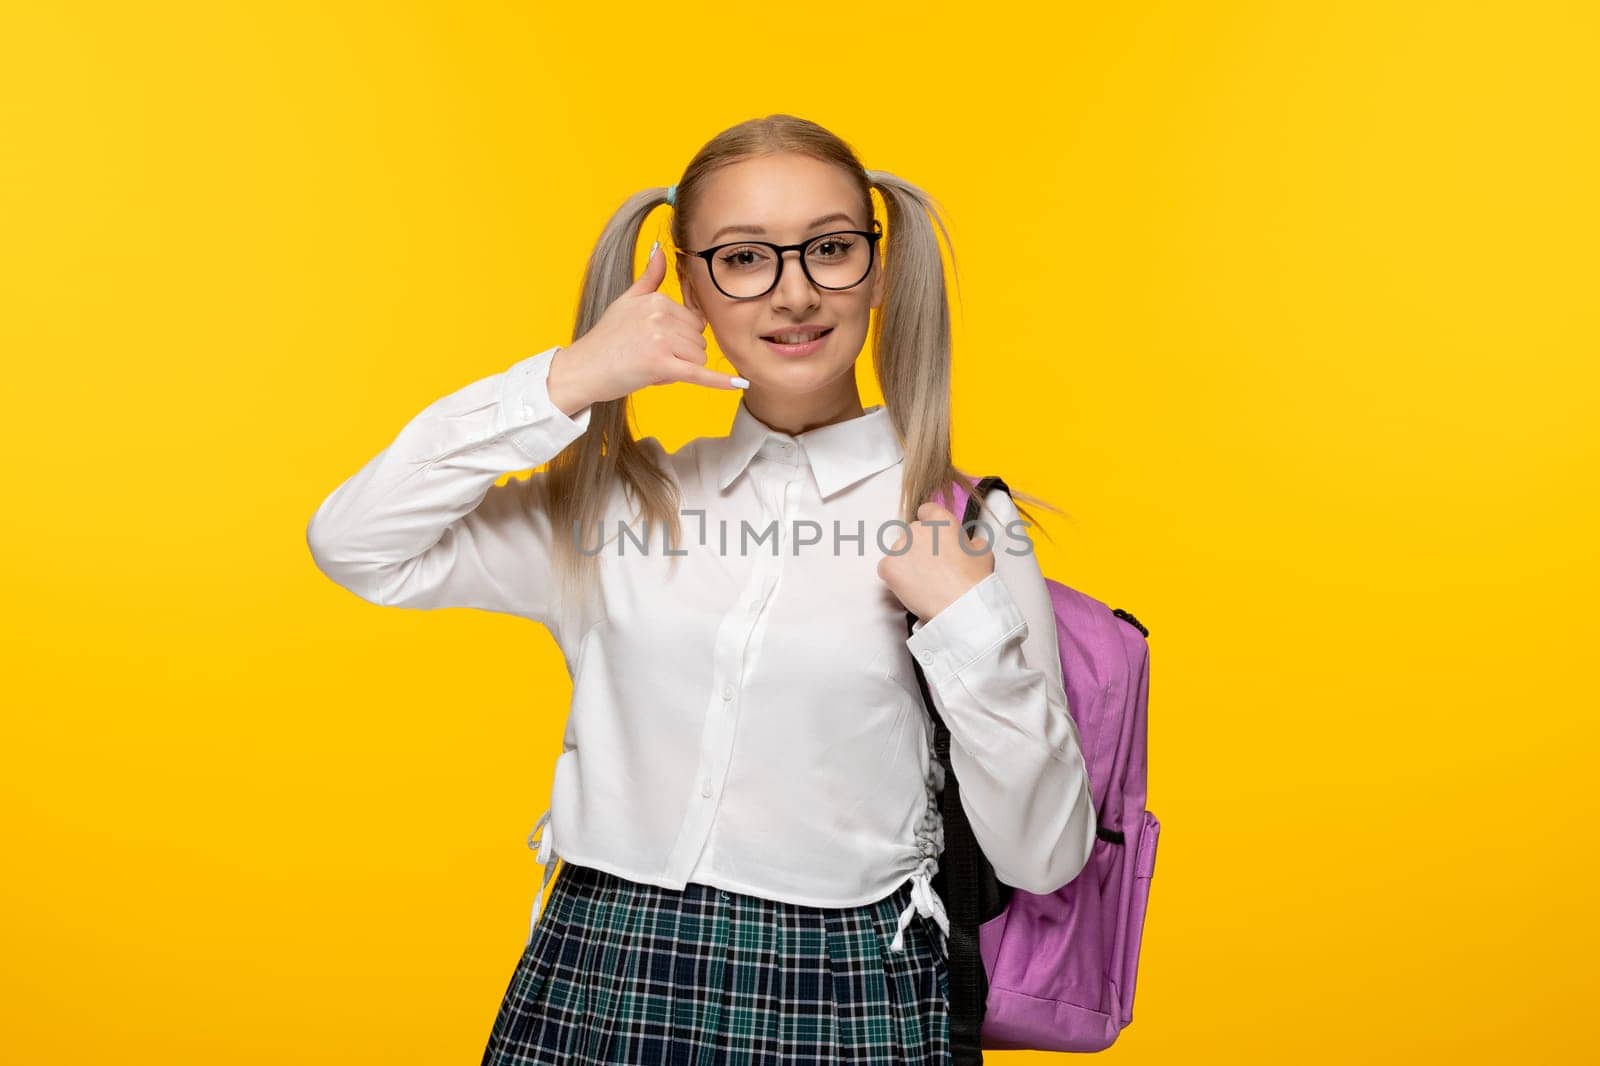 world book day blonde happy schoolgirl in uniform on yellow background showing calling gesture sign